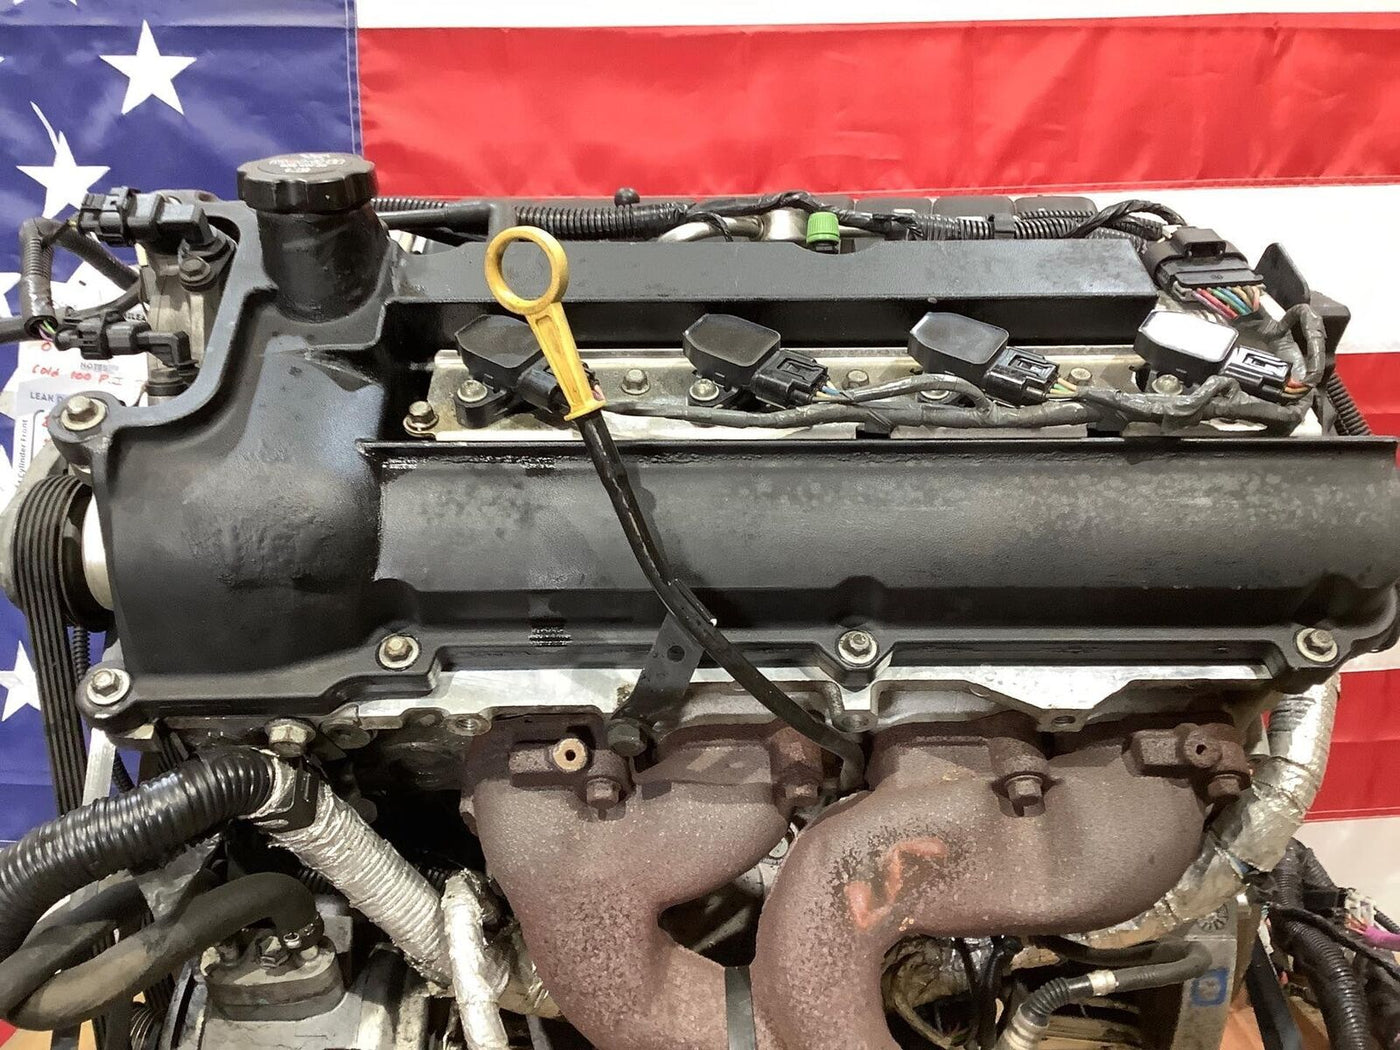 04-06 Cadillac XLR 4.6L Northstar V8 Engine Dropout Donor Swap (102k) Tested